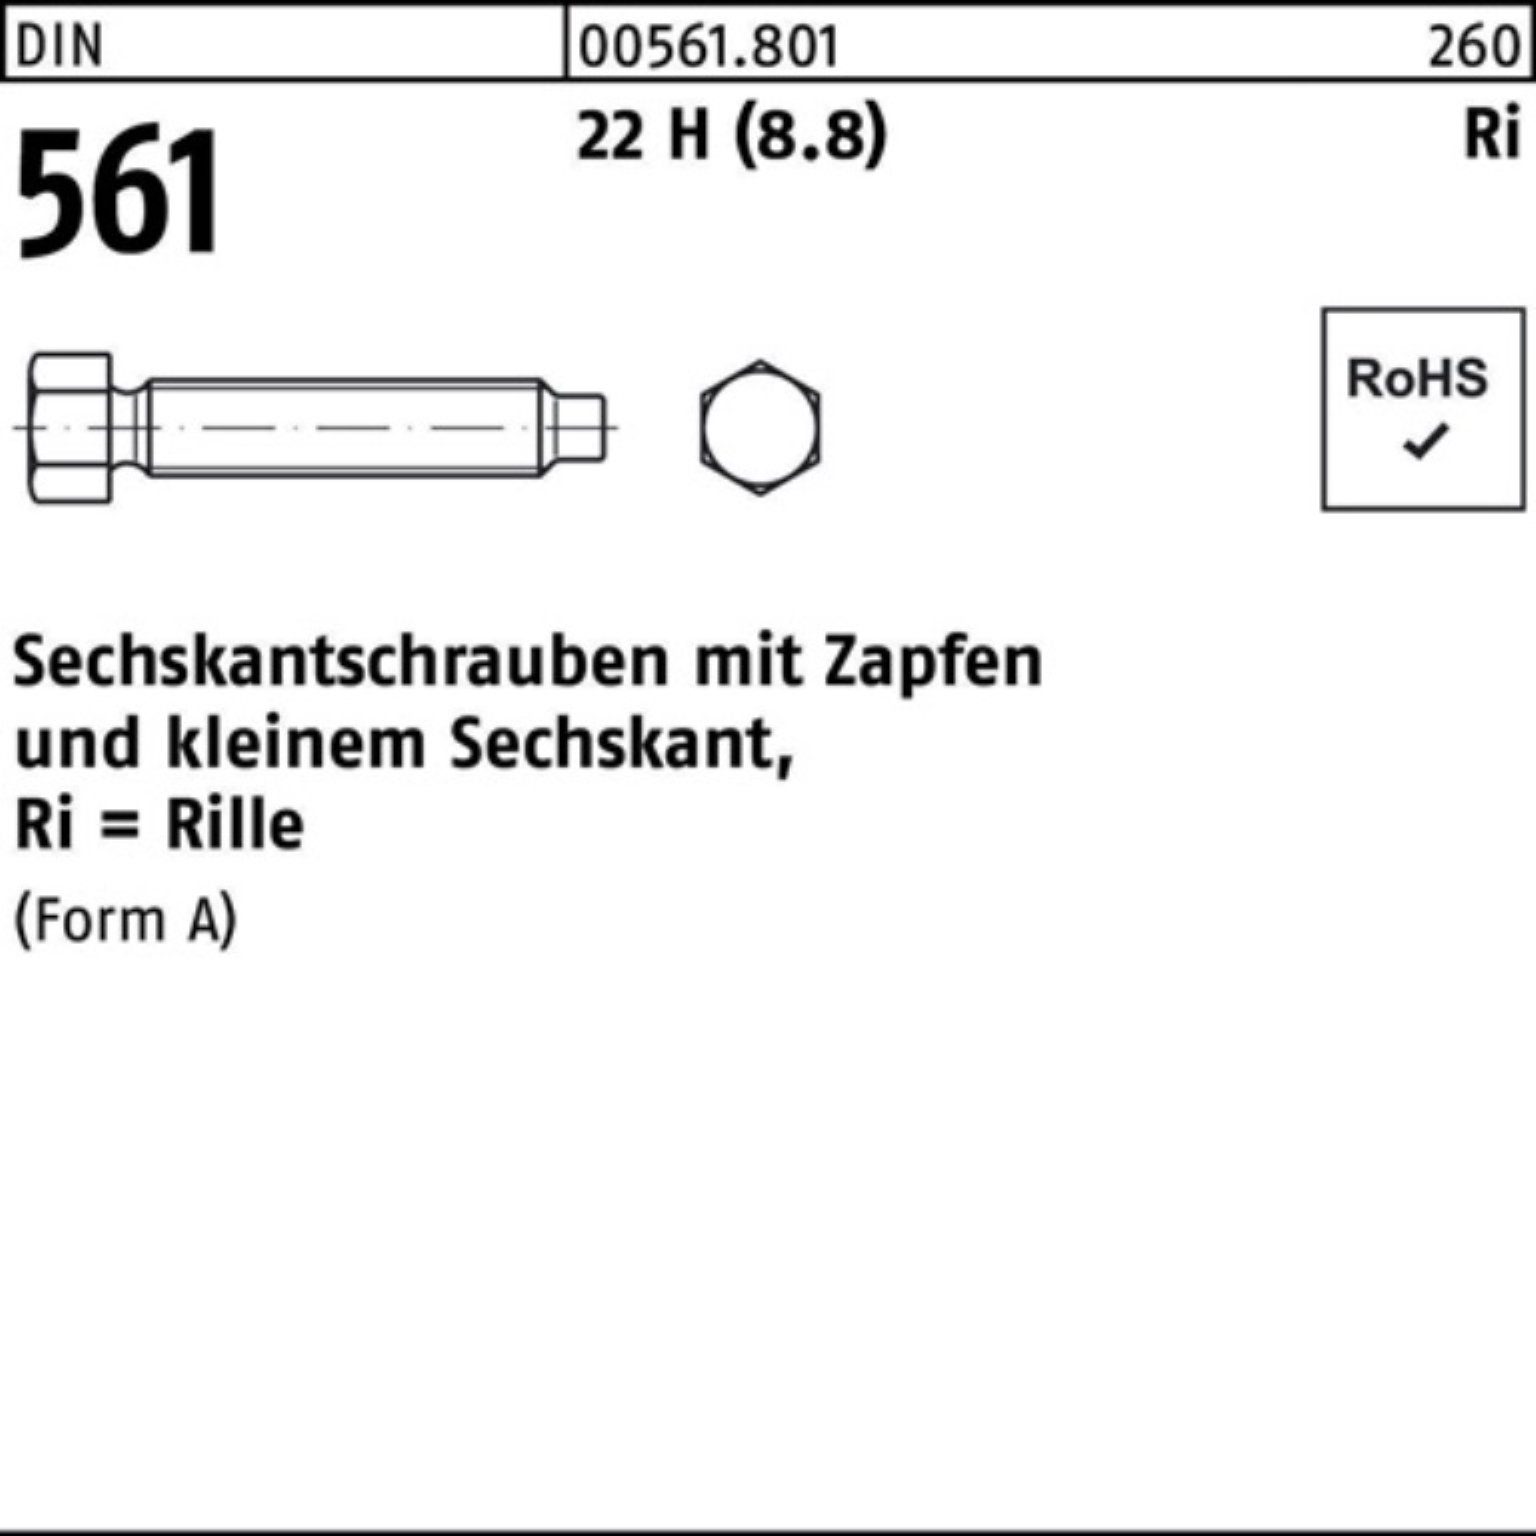 Reyher Sechskantschraube 100er Pack Sechskantschraube DIN 561 Zapfen AM 12x 35 22 H (8.8) 25 St